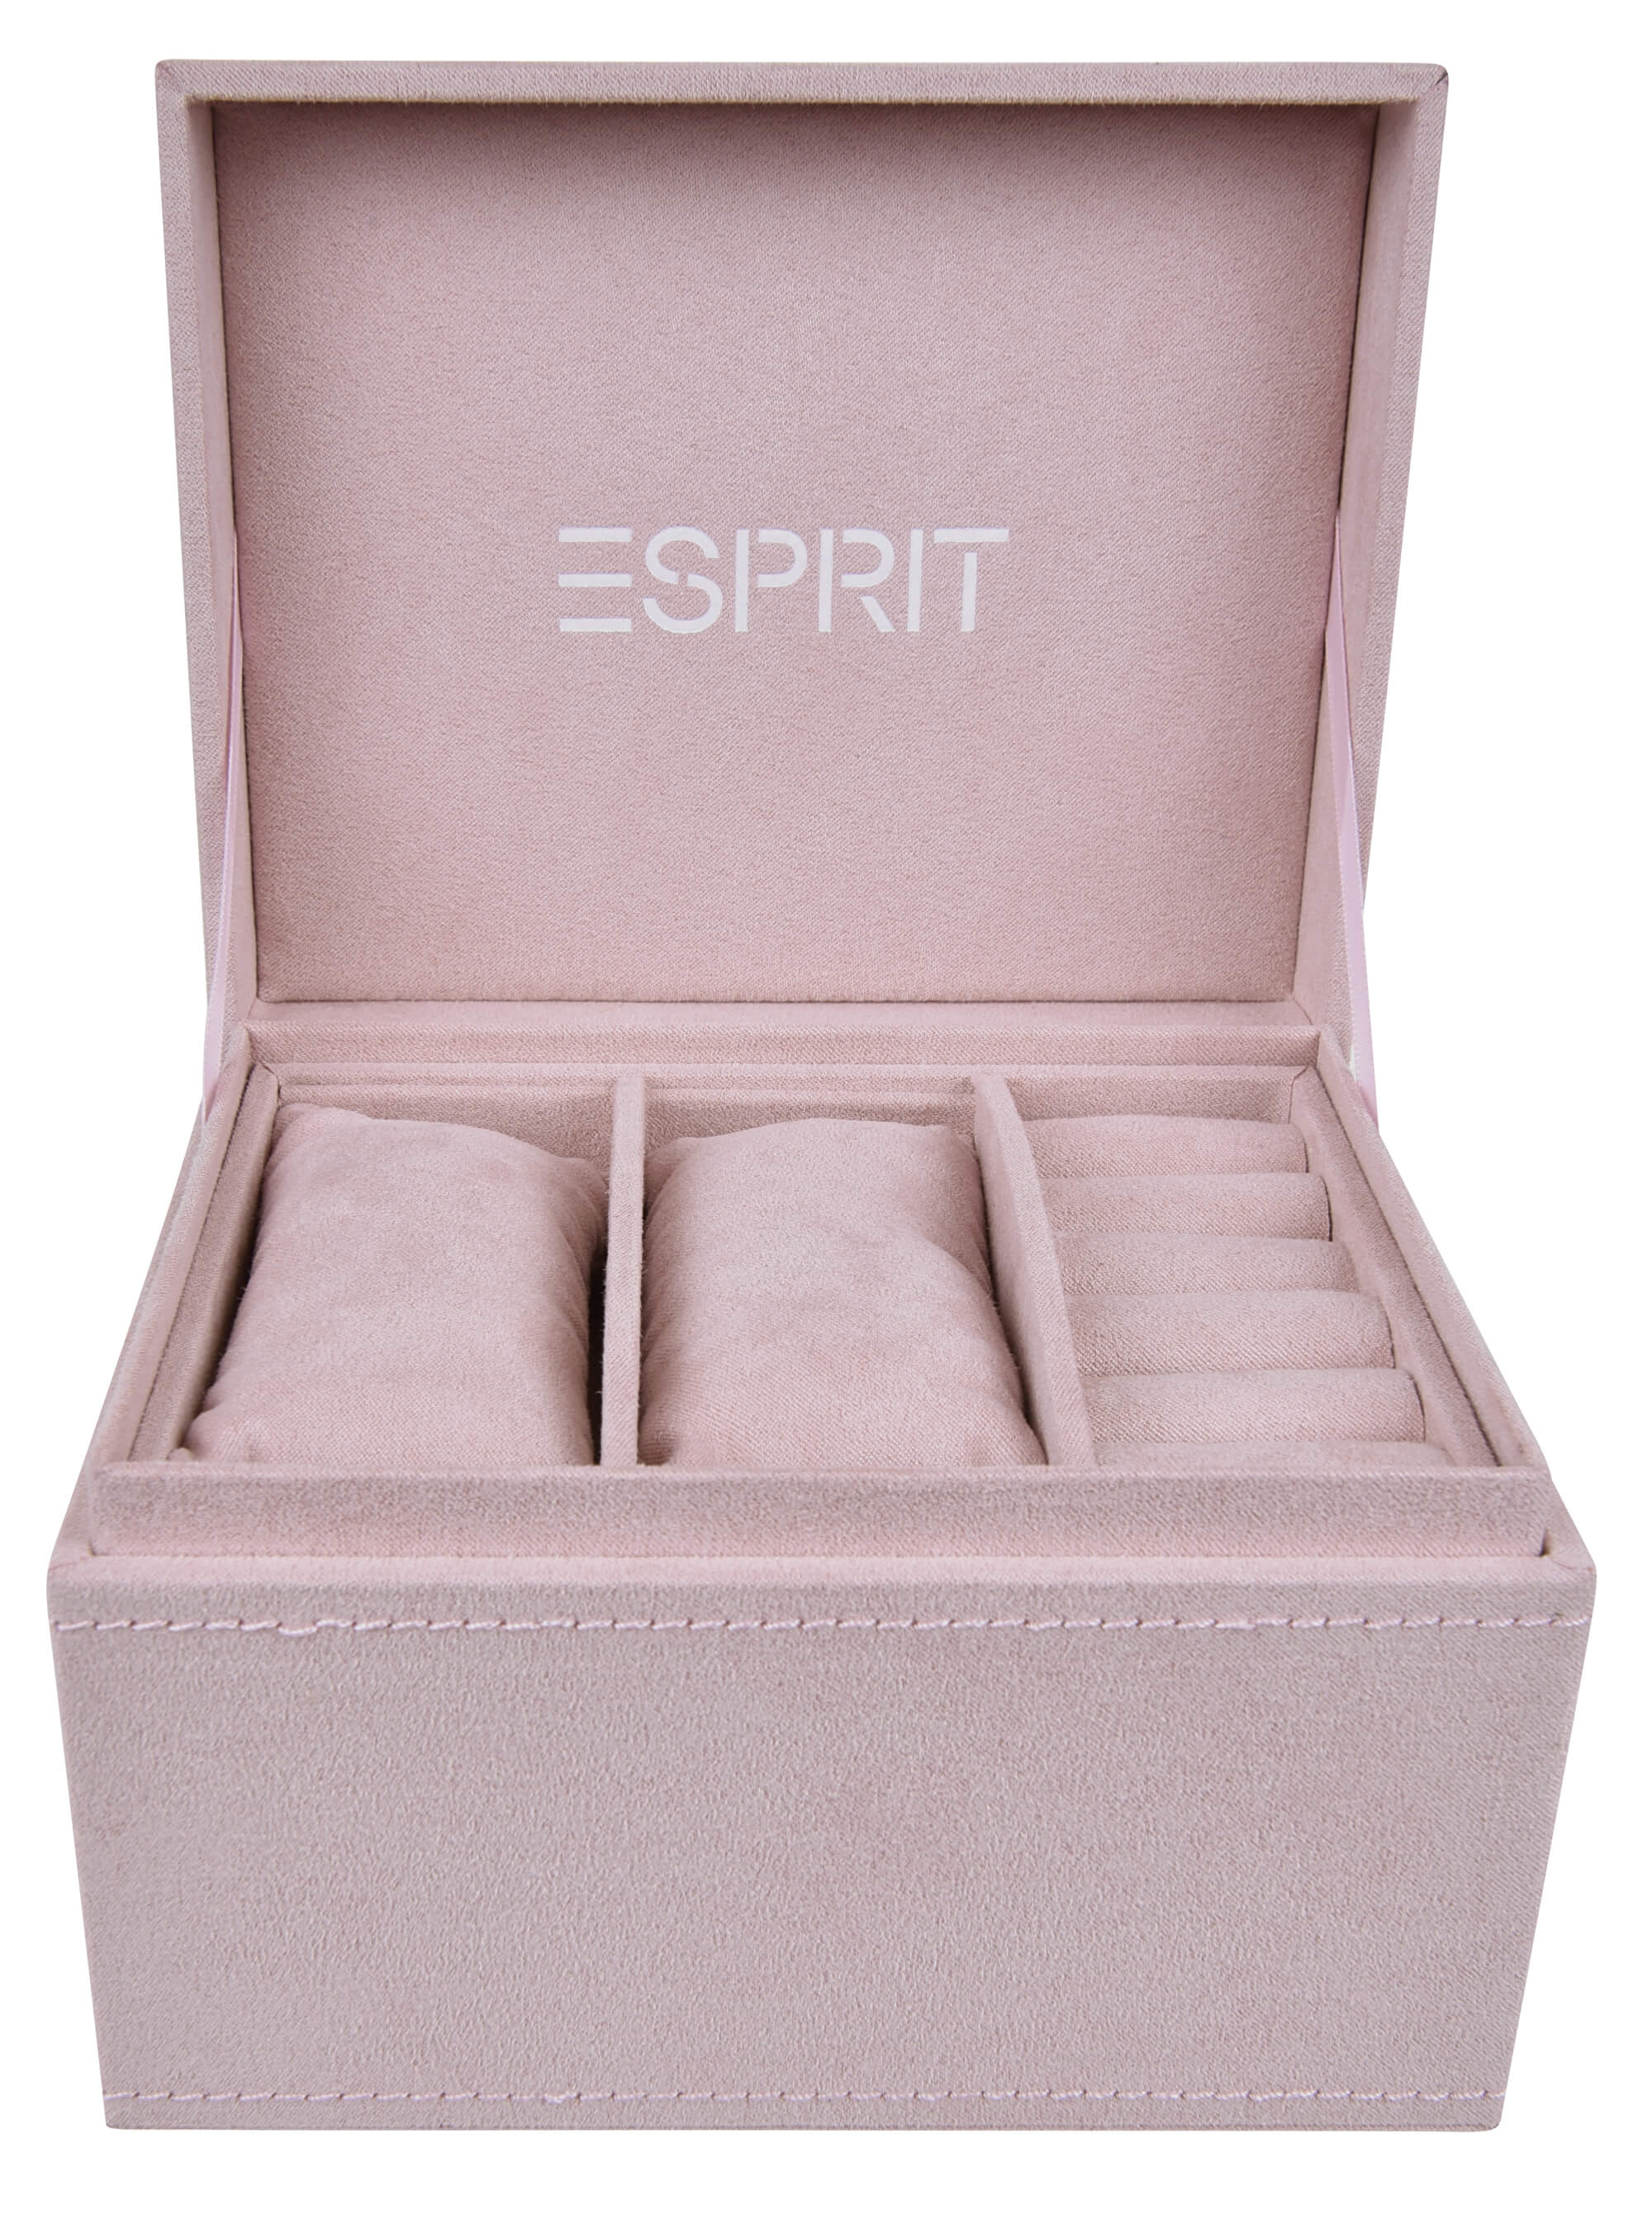 Esprit Dámská šperkovnice ESPRIT Jewel Box EJB